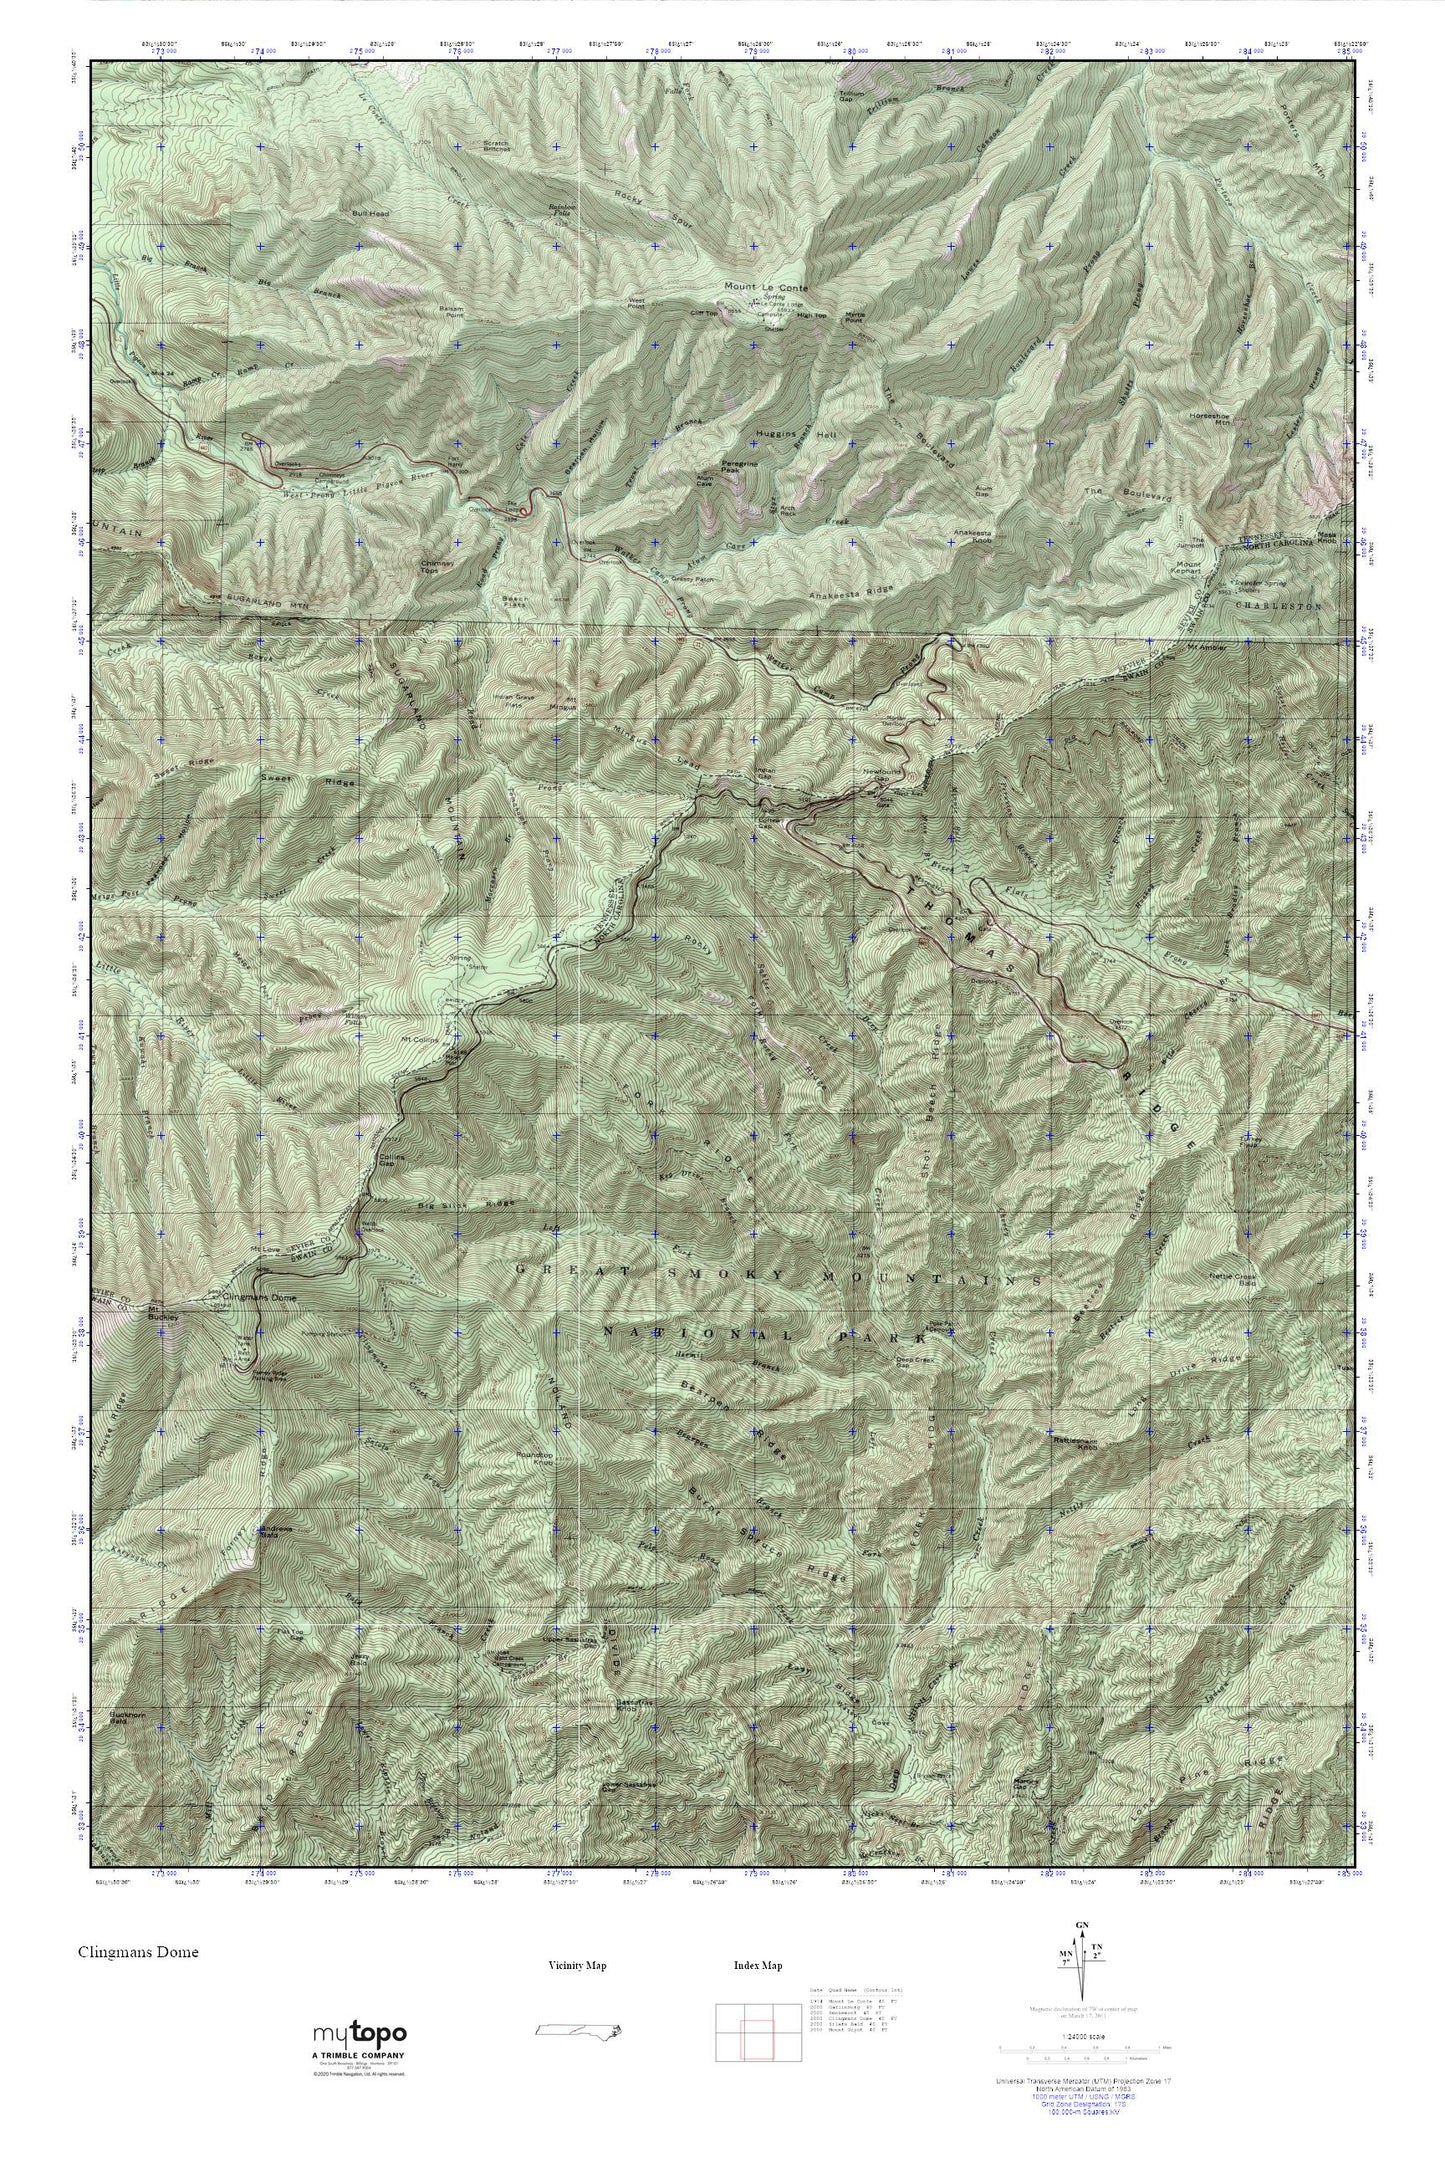 Clingmans Dome MyTopo Explorer Series Map Image